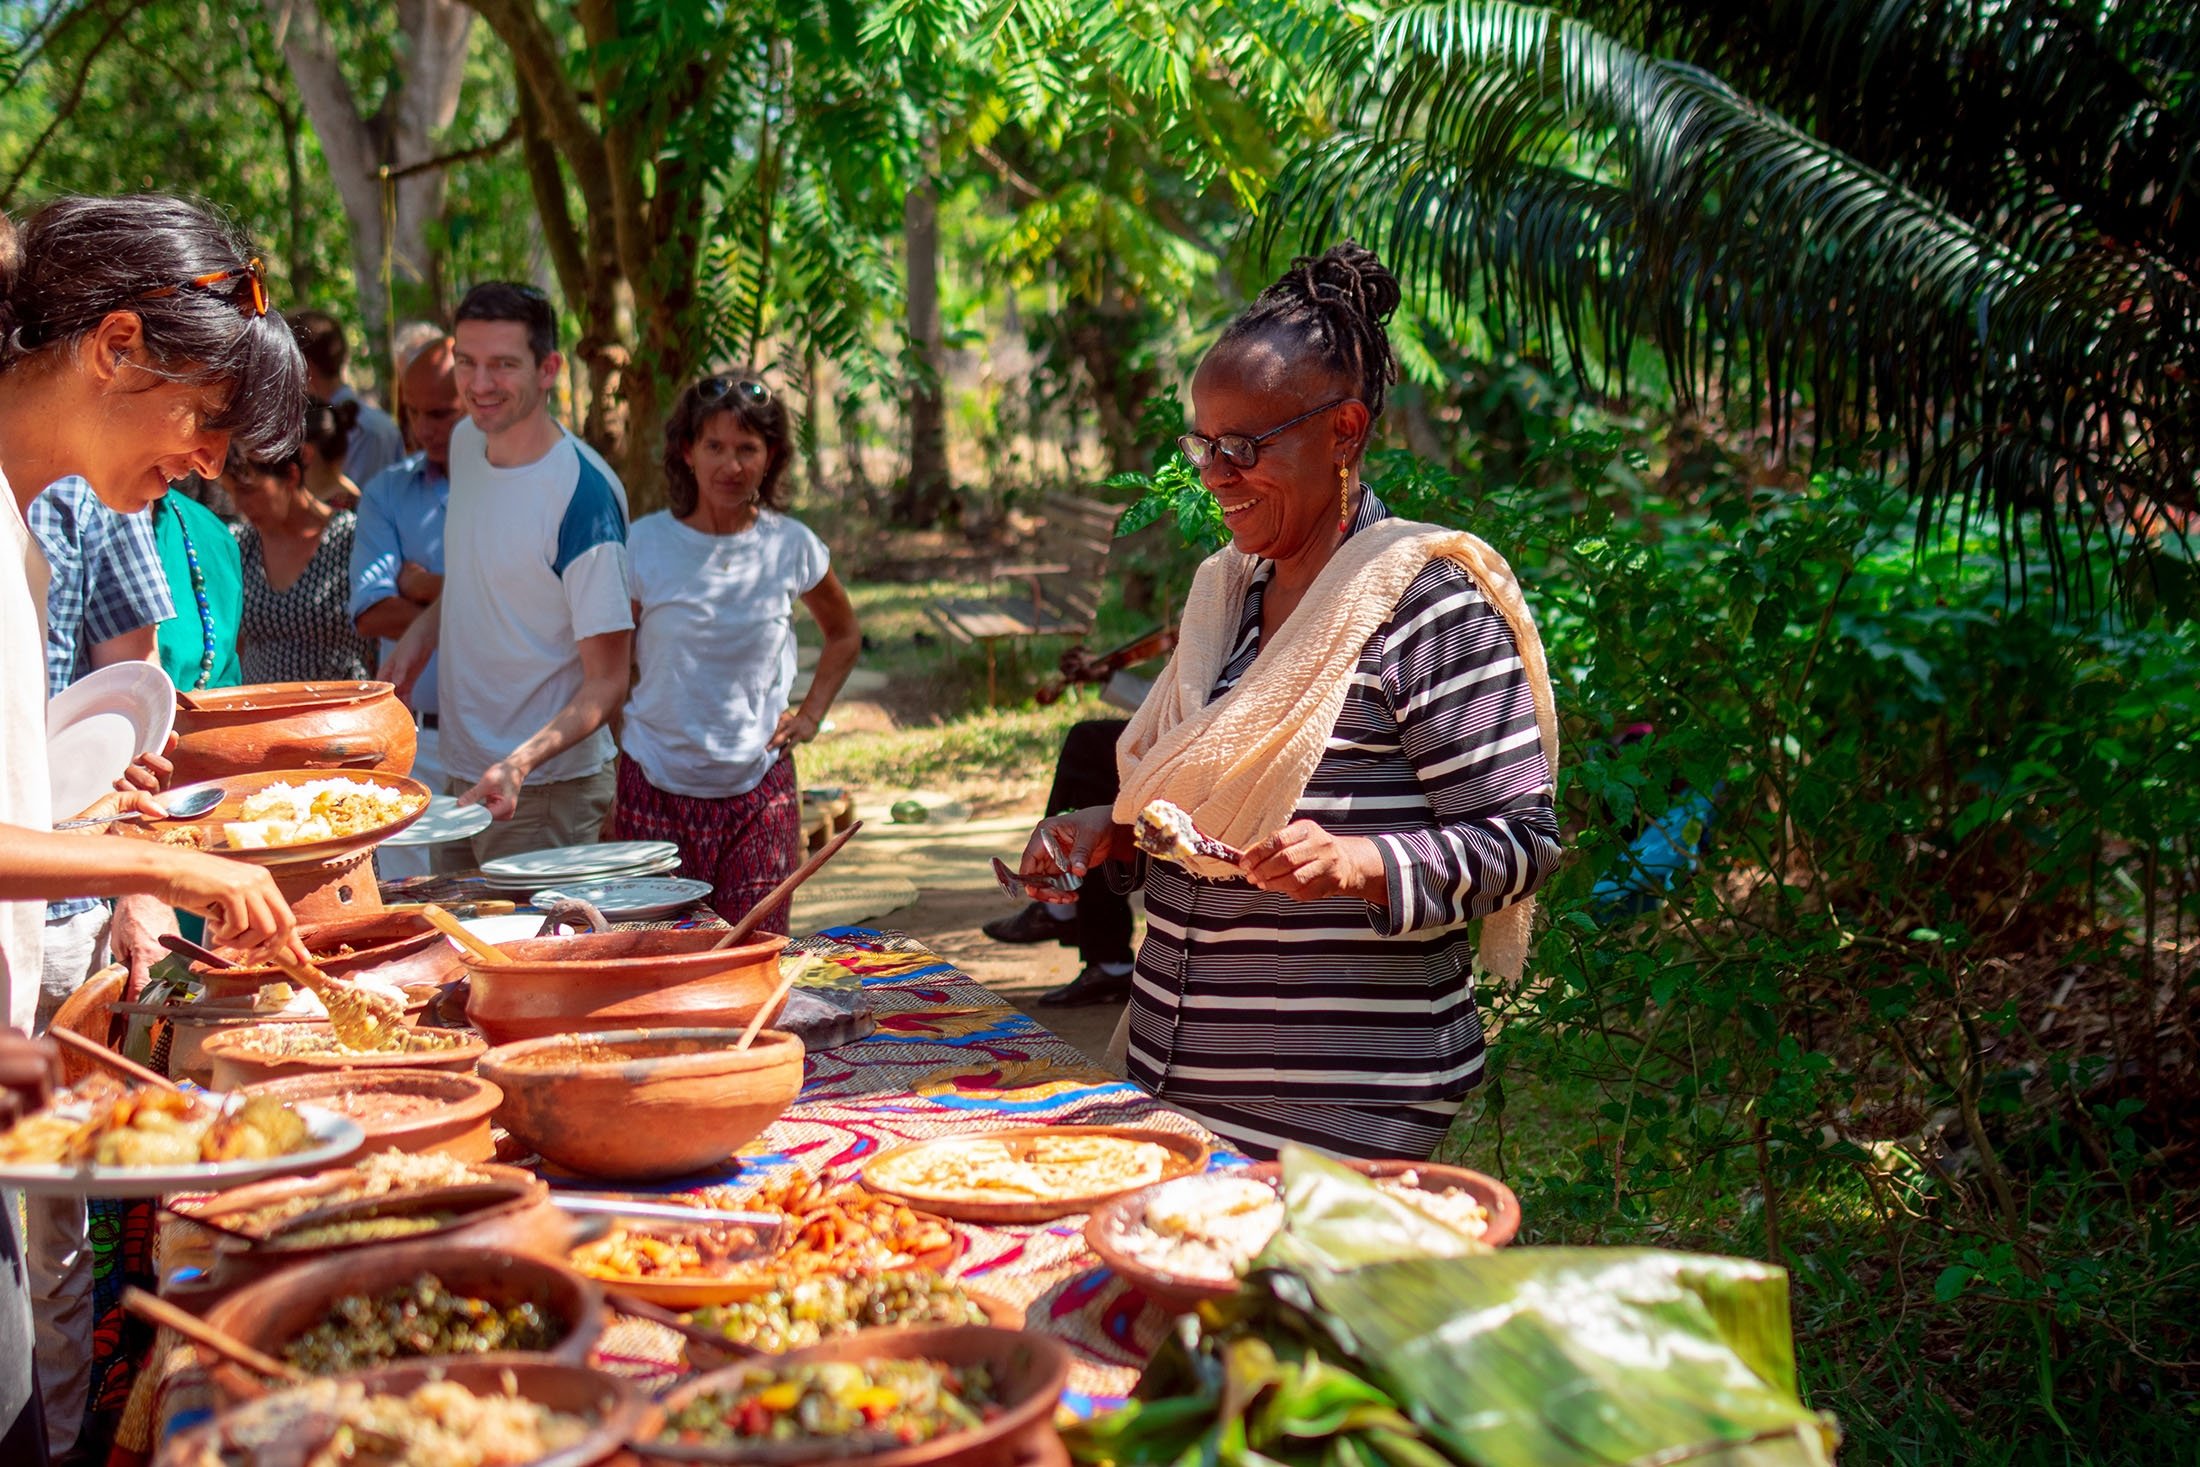 Farmer Mwatima Juma serves up food for tourists at a buffet on her Msonge Farm in Zanzibar. (Keegan Checks via dpa)